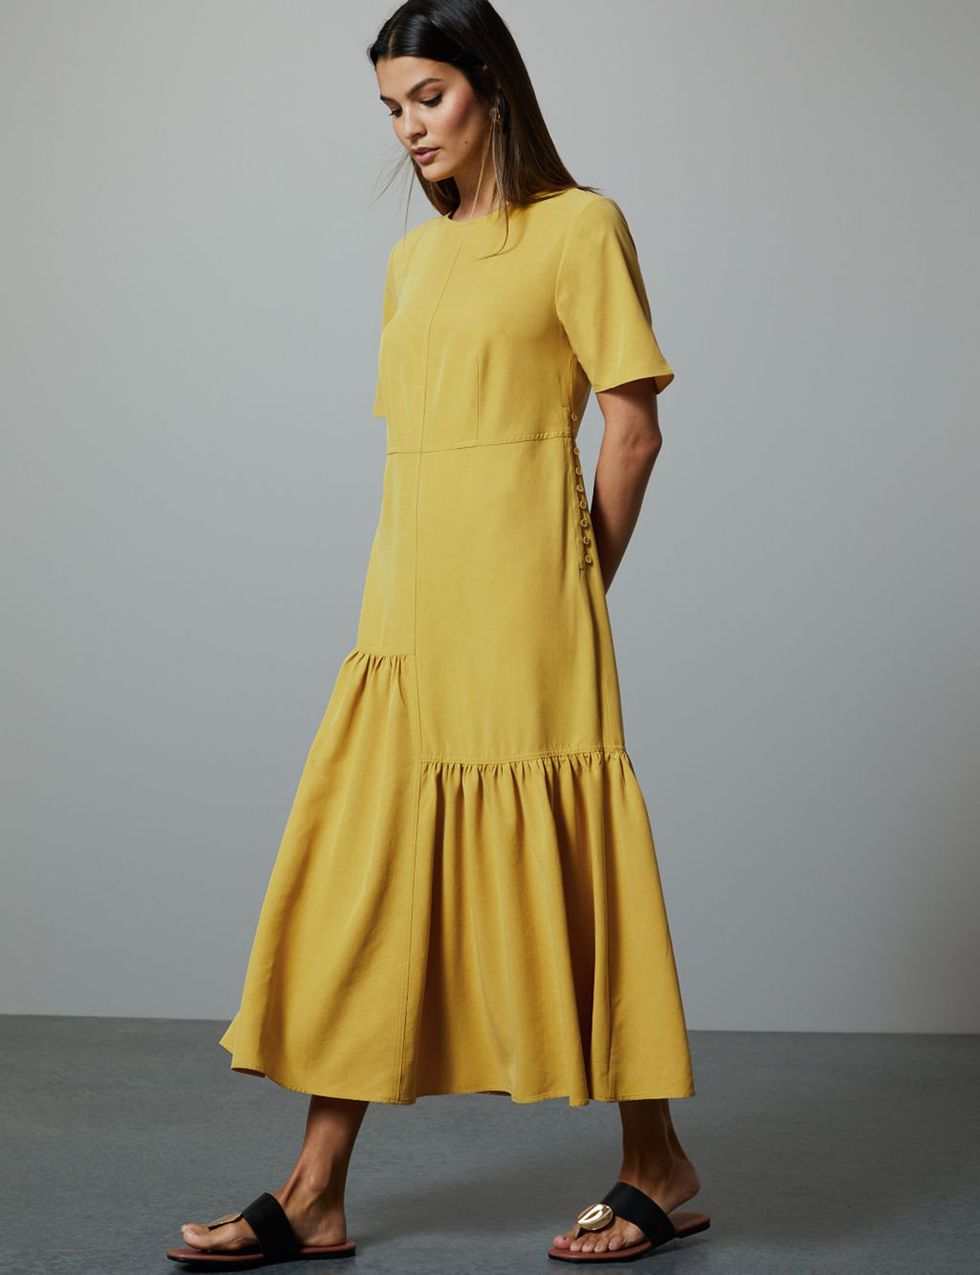 Marks & Spencer yellow dress